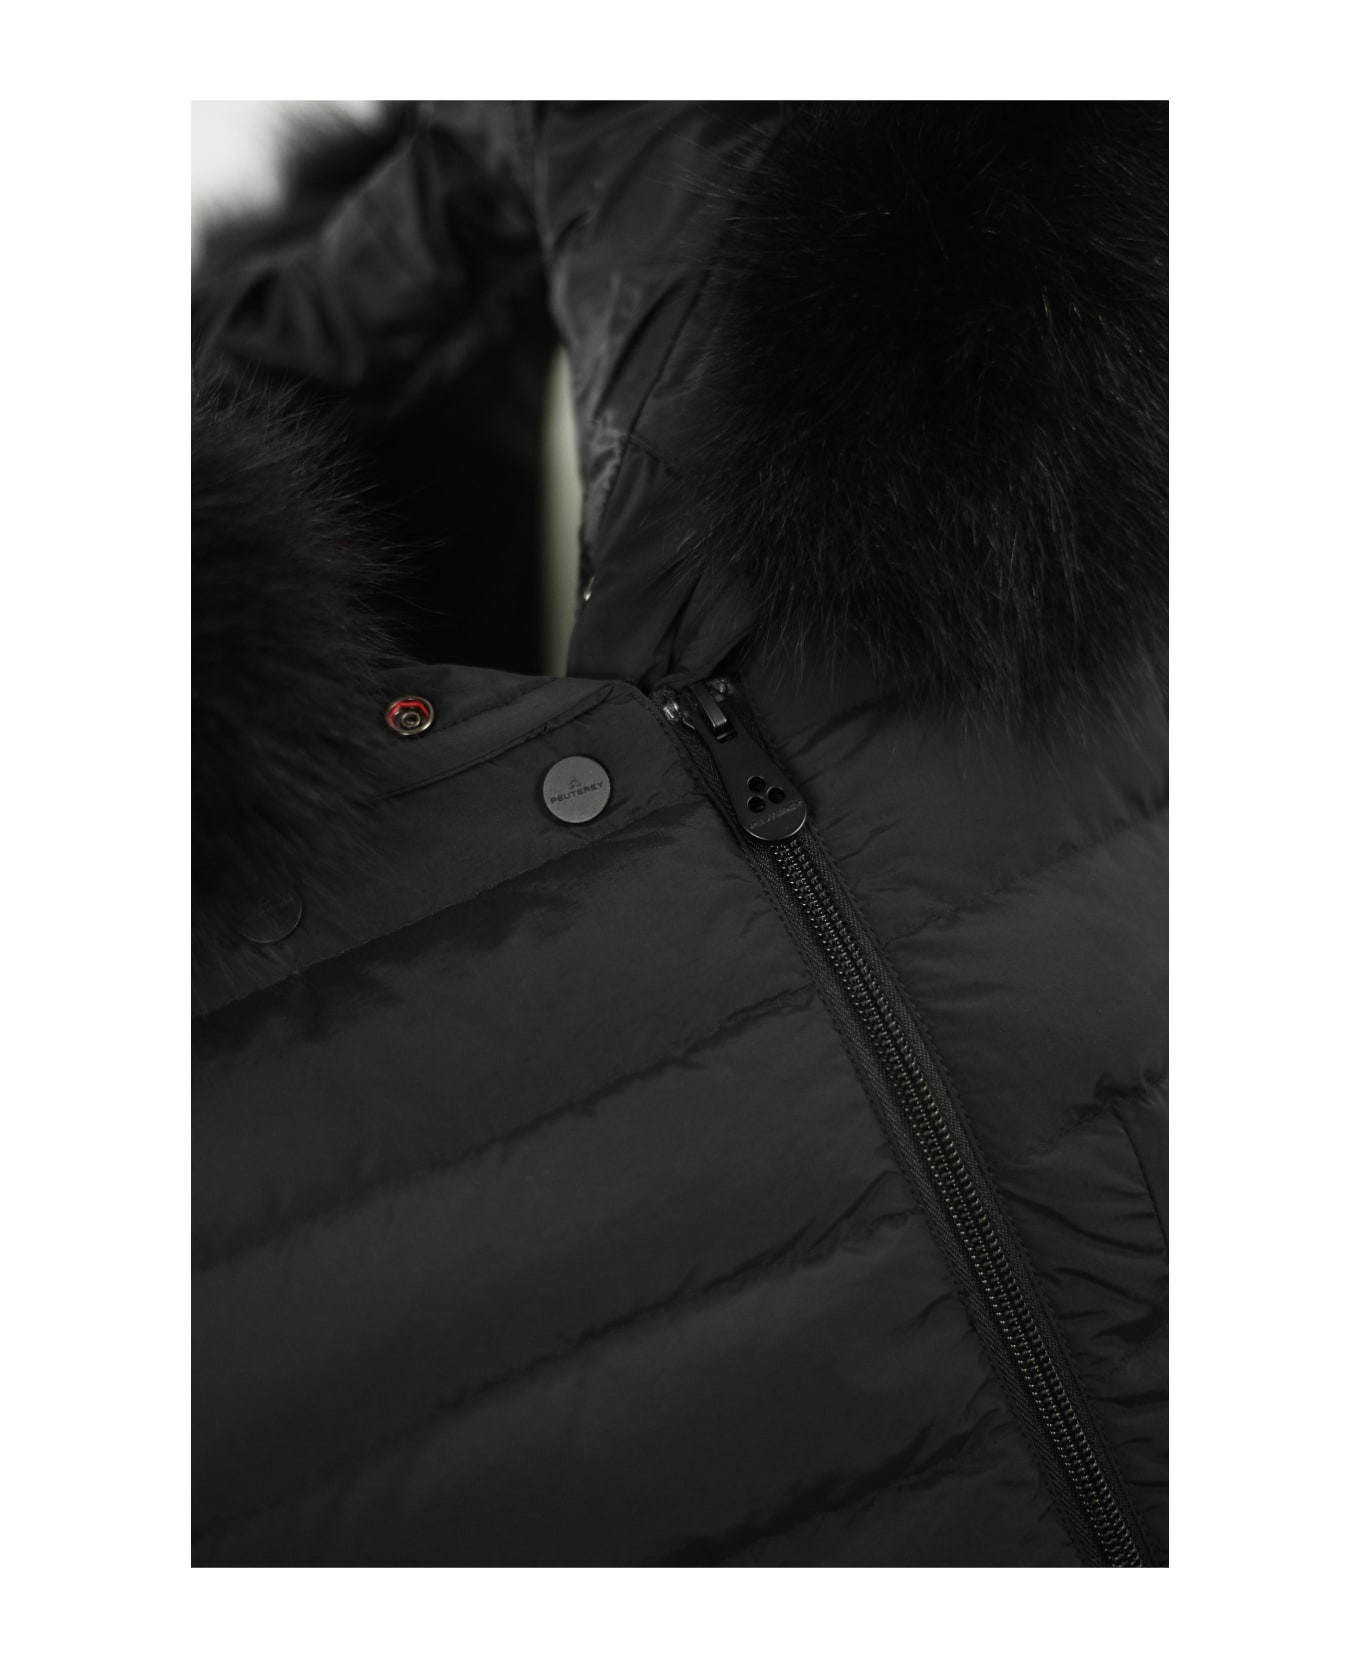 Peuterey Down Jacket With Fur Seriola Ml 04 Fur - Black コート